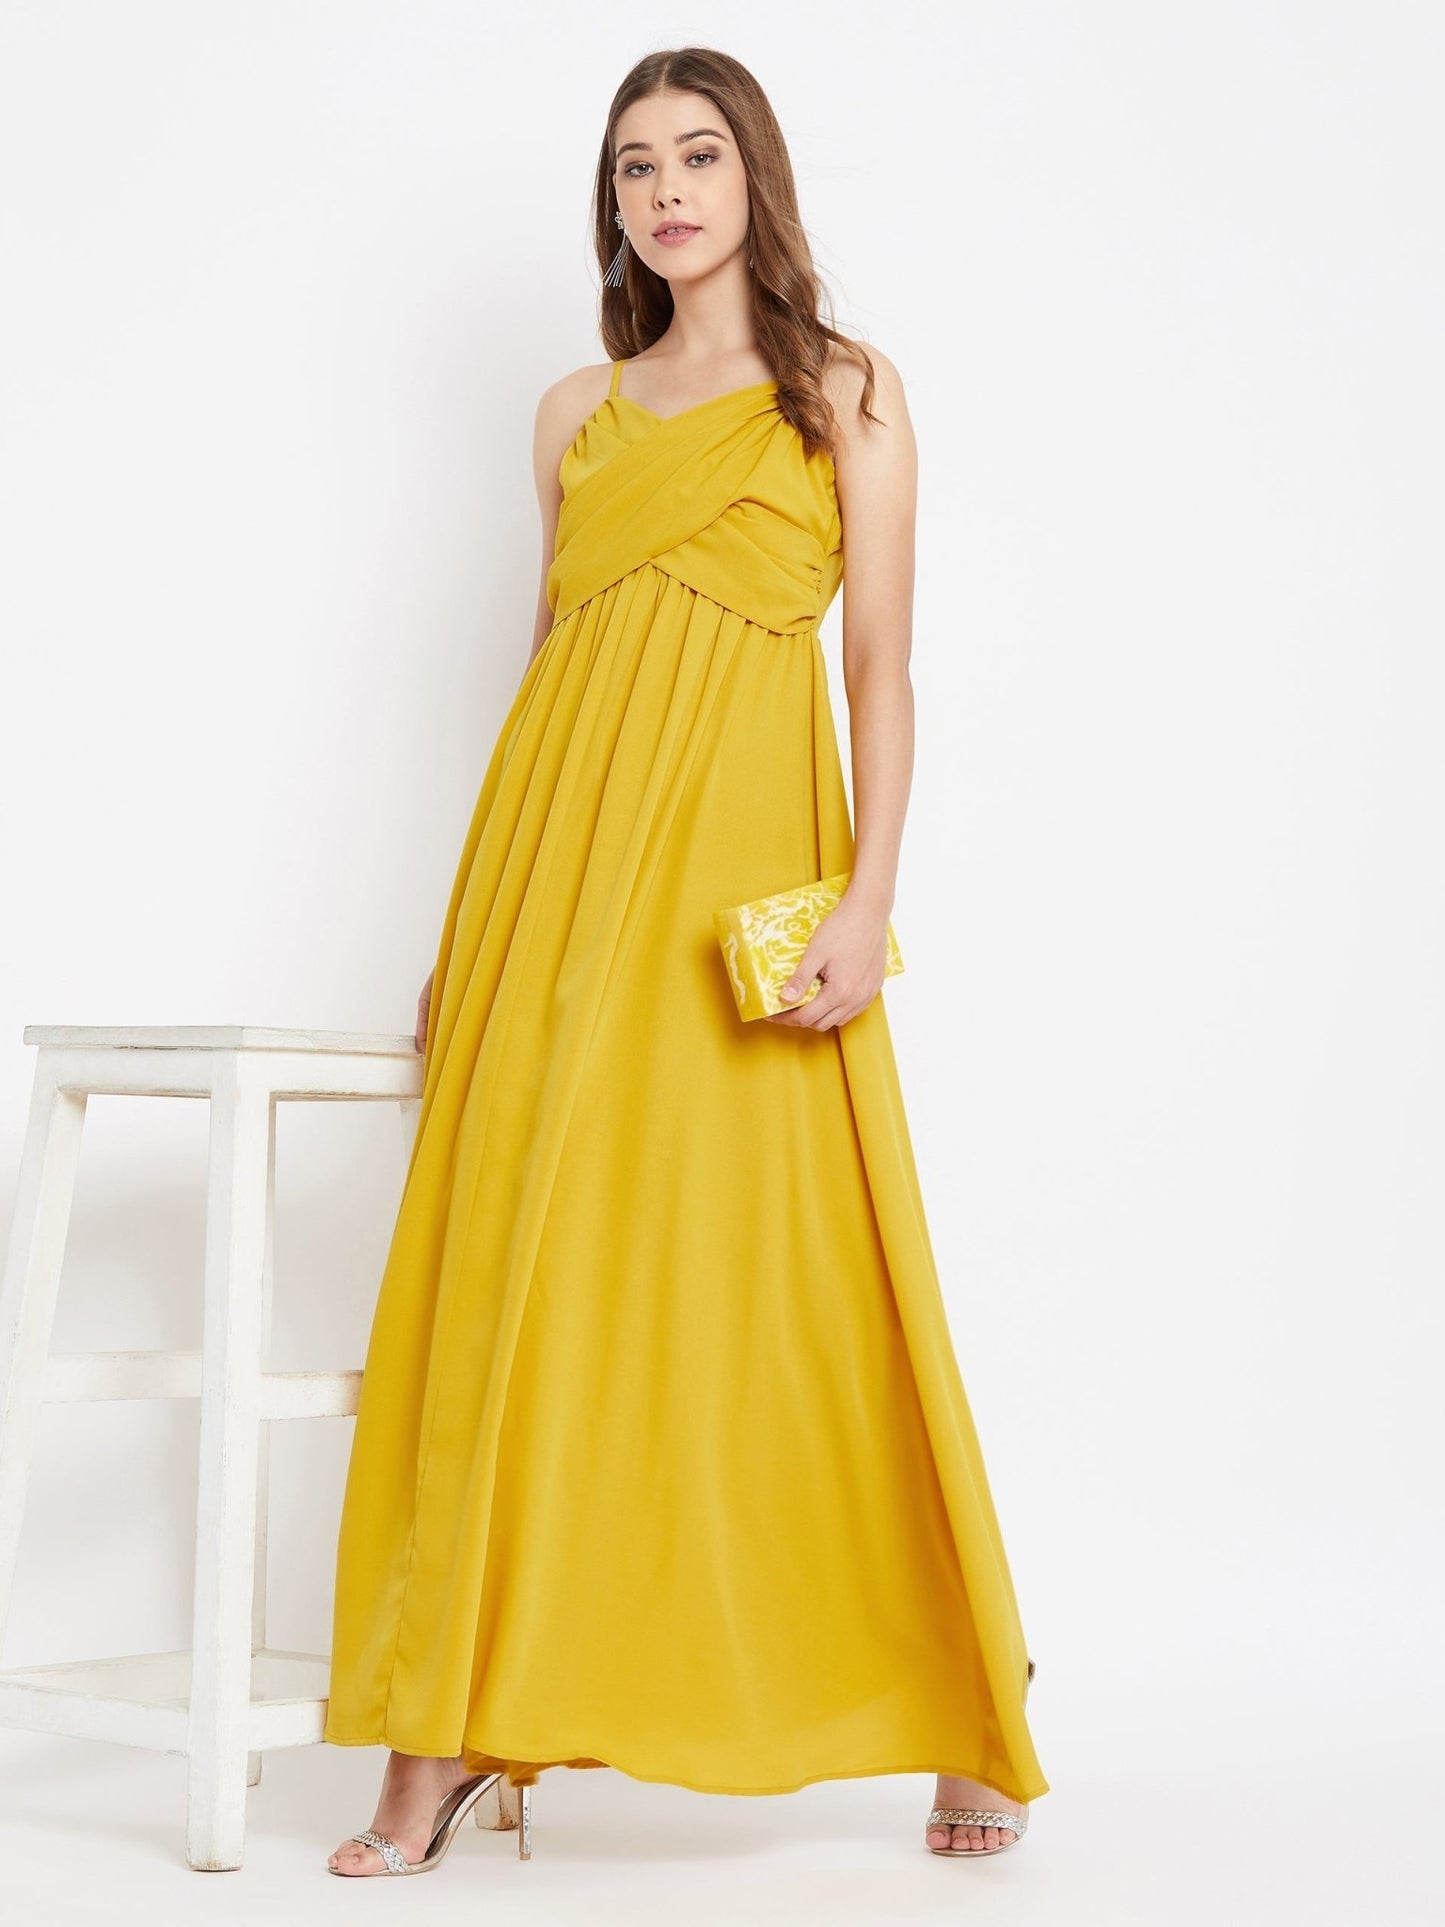 Folk Republic Women Solid Yellow V-Neck Sleeveless Ruched Maxi Dress - #folk republic#